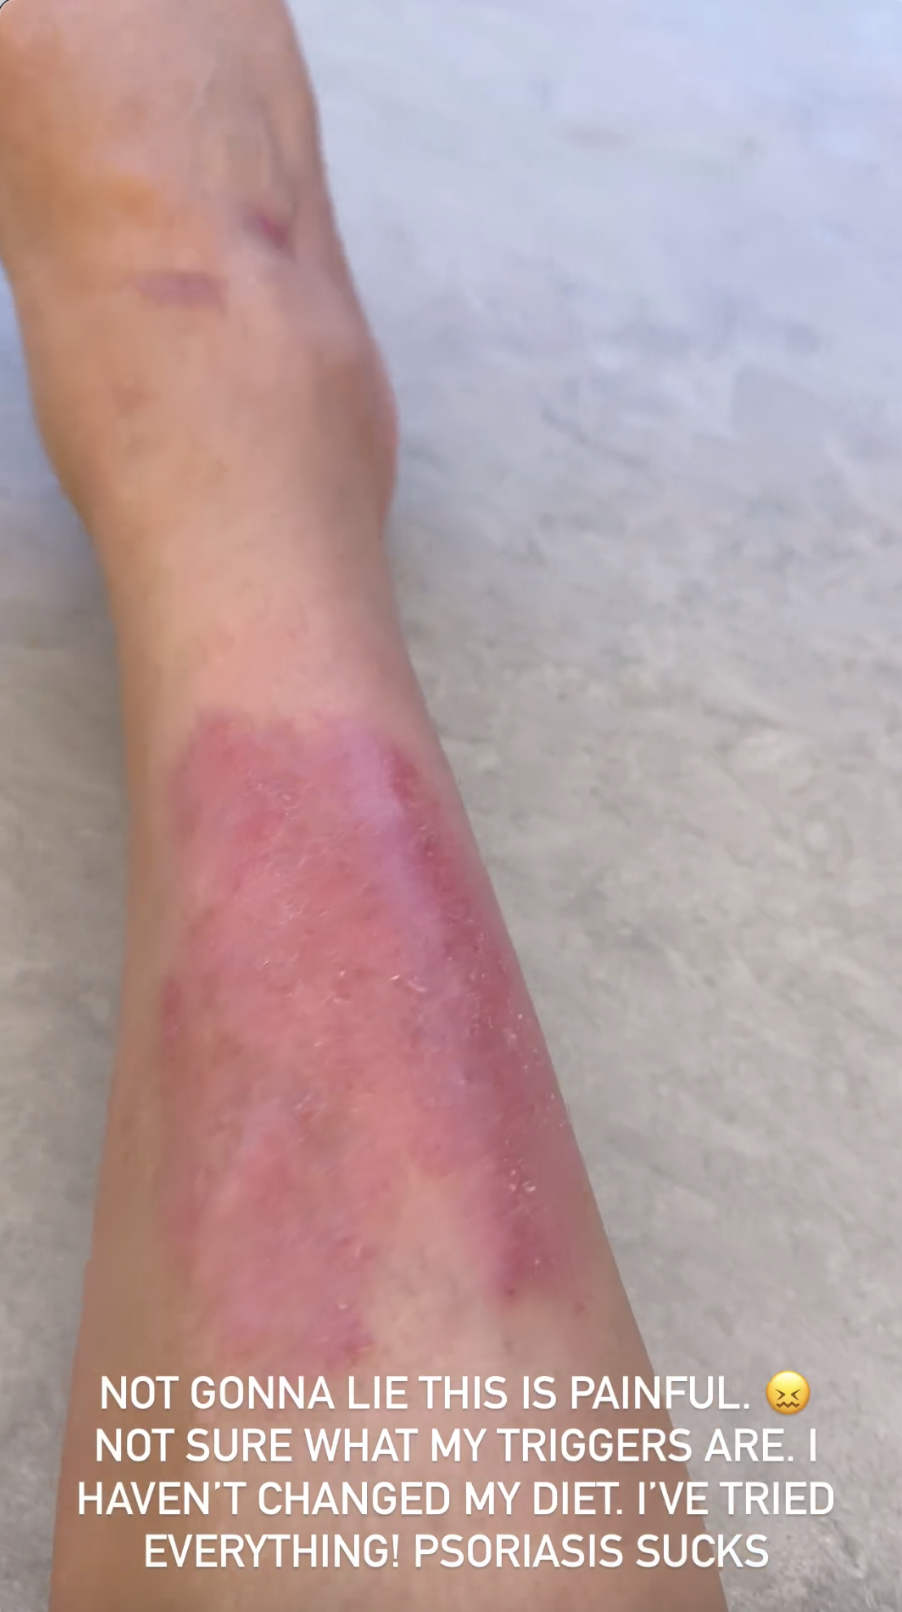 kim kardashian reveals painful psoriasis on her leg